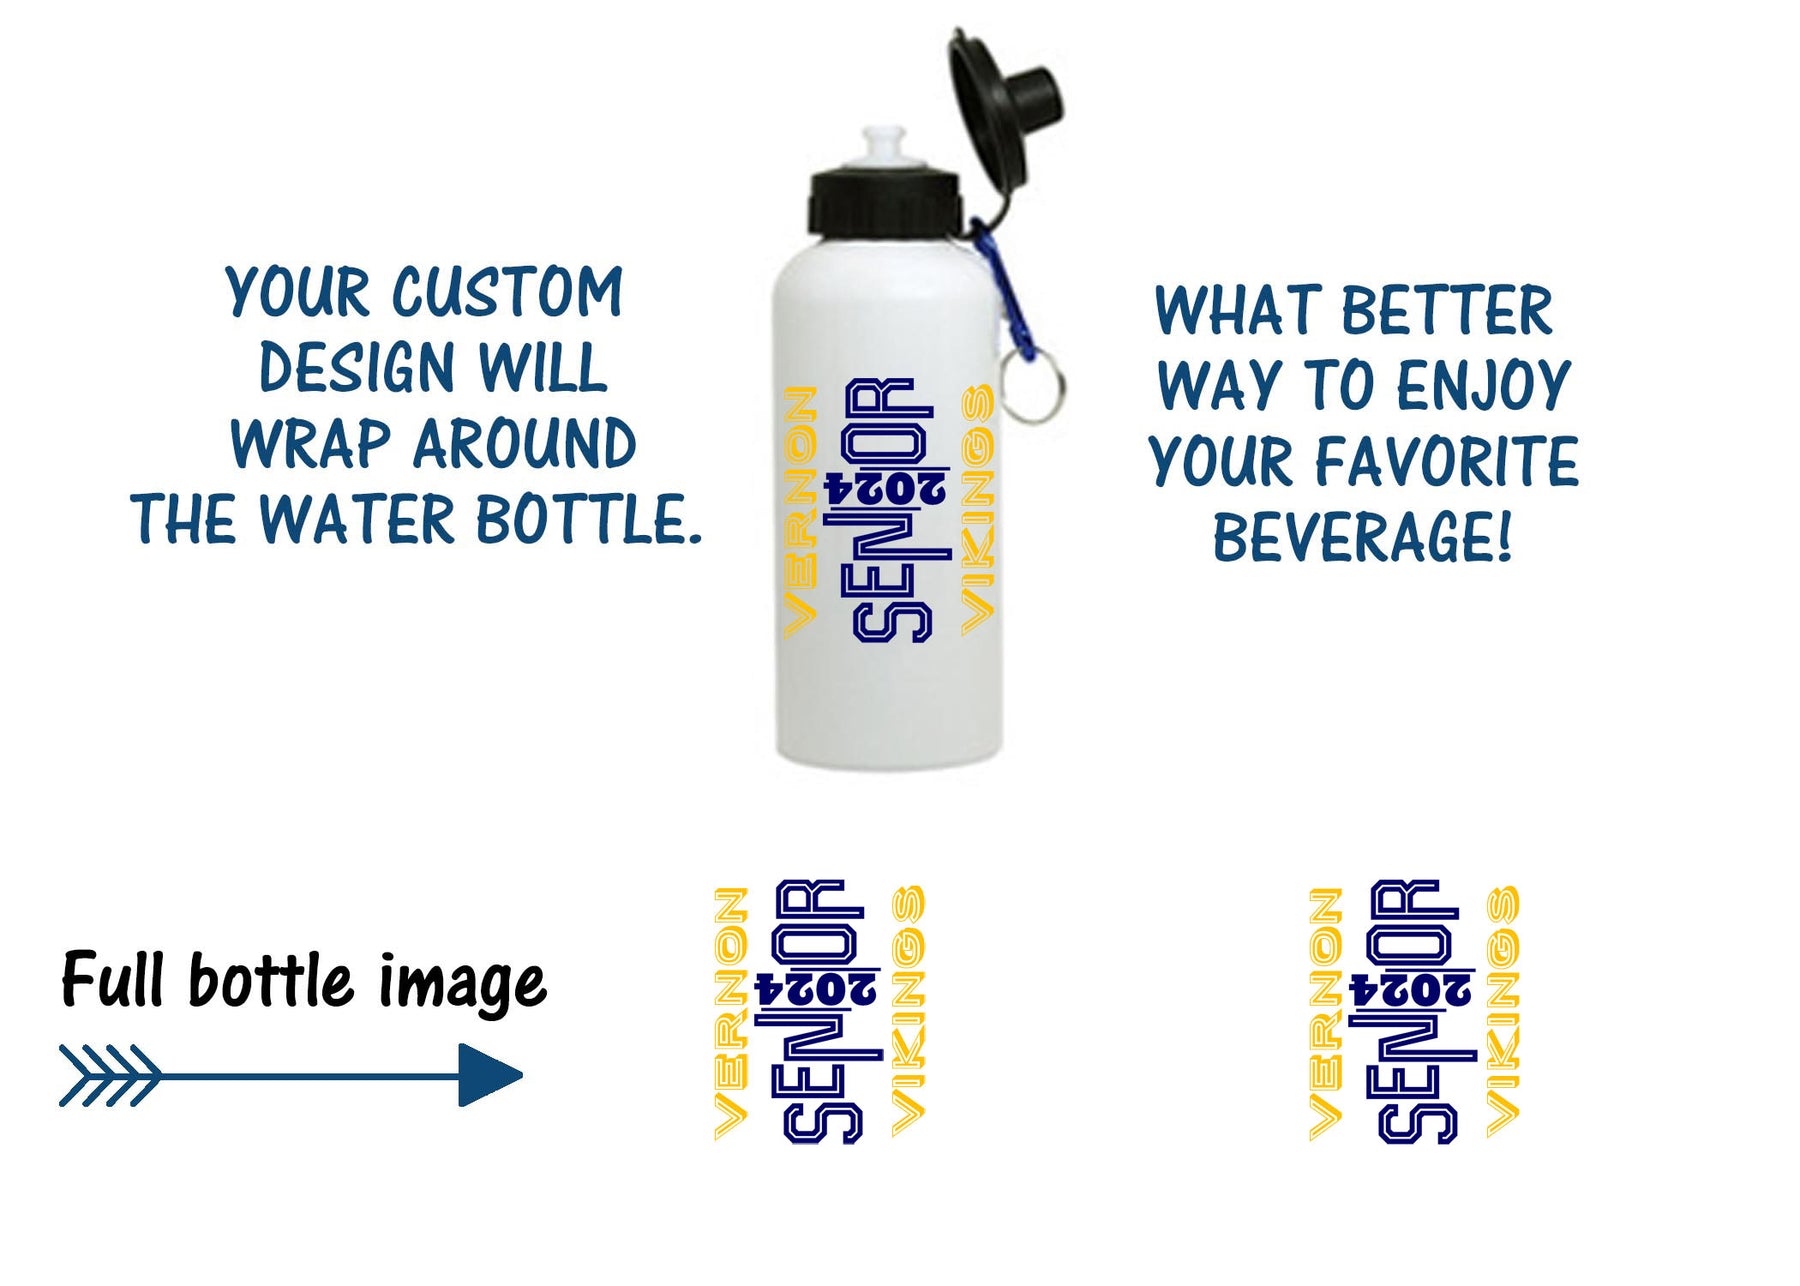 VTHS Design 6 Water Bottle